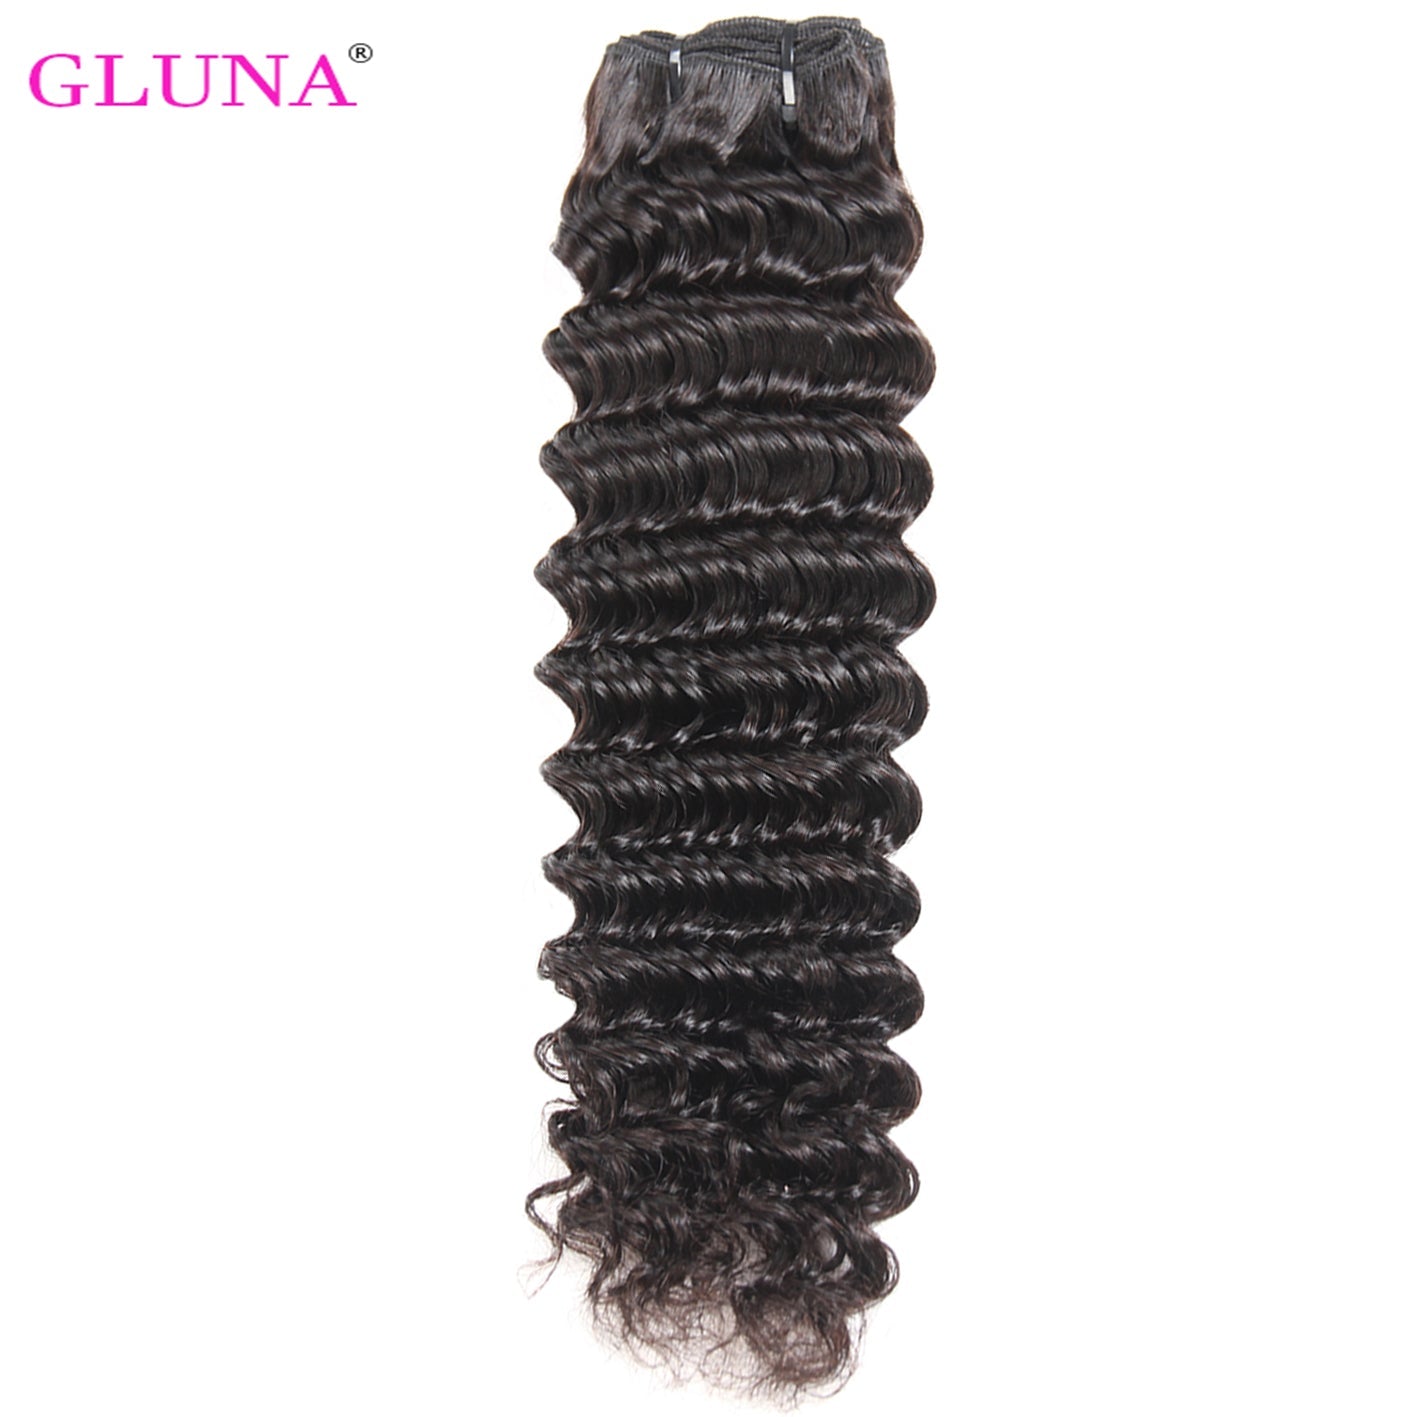 Gluna Hair Deep Curly 1 Bundle 100% Virgin Human Hair Extension Weave Natural Color Hair Weft